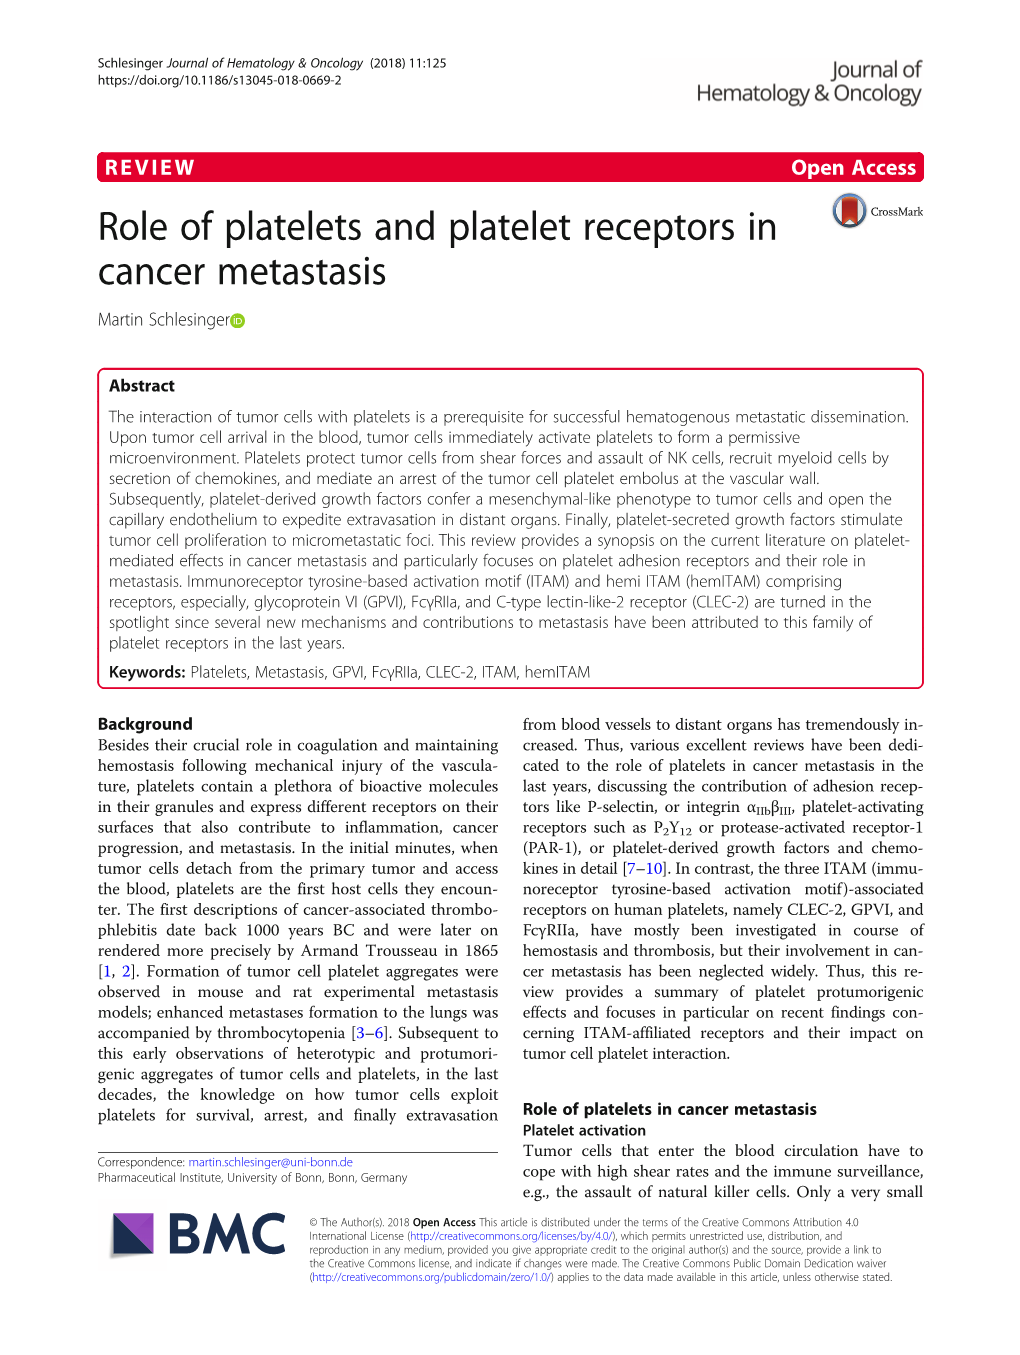 Role of Platelets and Platelet Receptors in Cancer Metastasis Martin Schlesinger